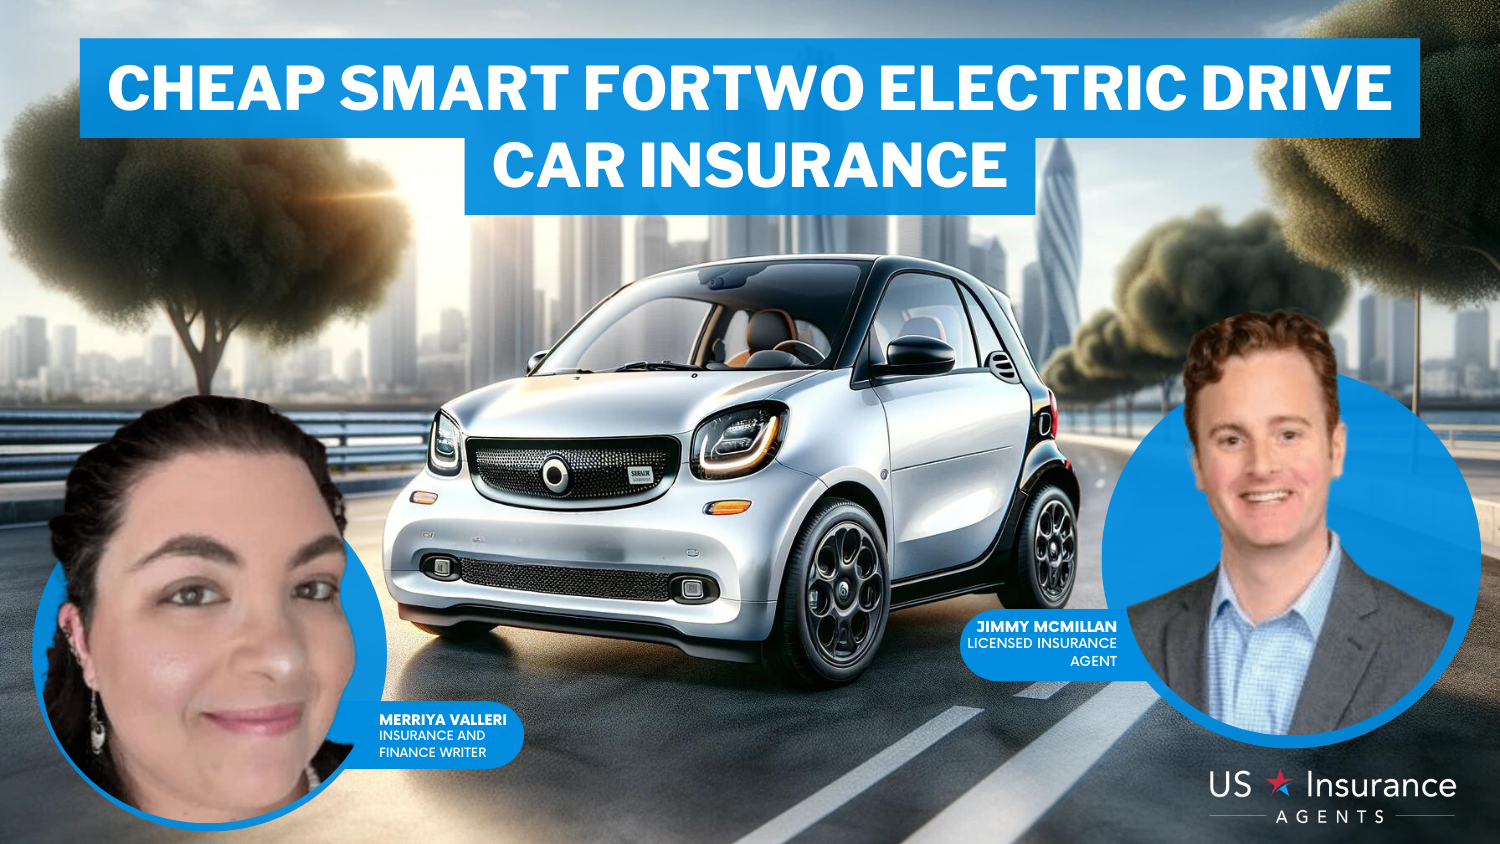 Progressive, Allstate and American Family: cheap Smart Fortwo Electric Drive car insurance